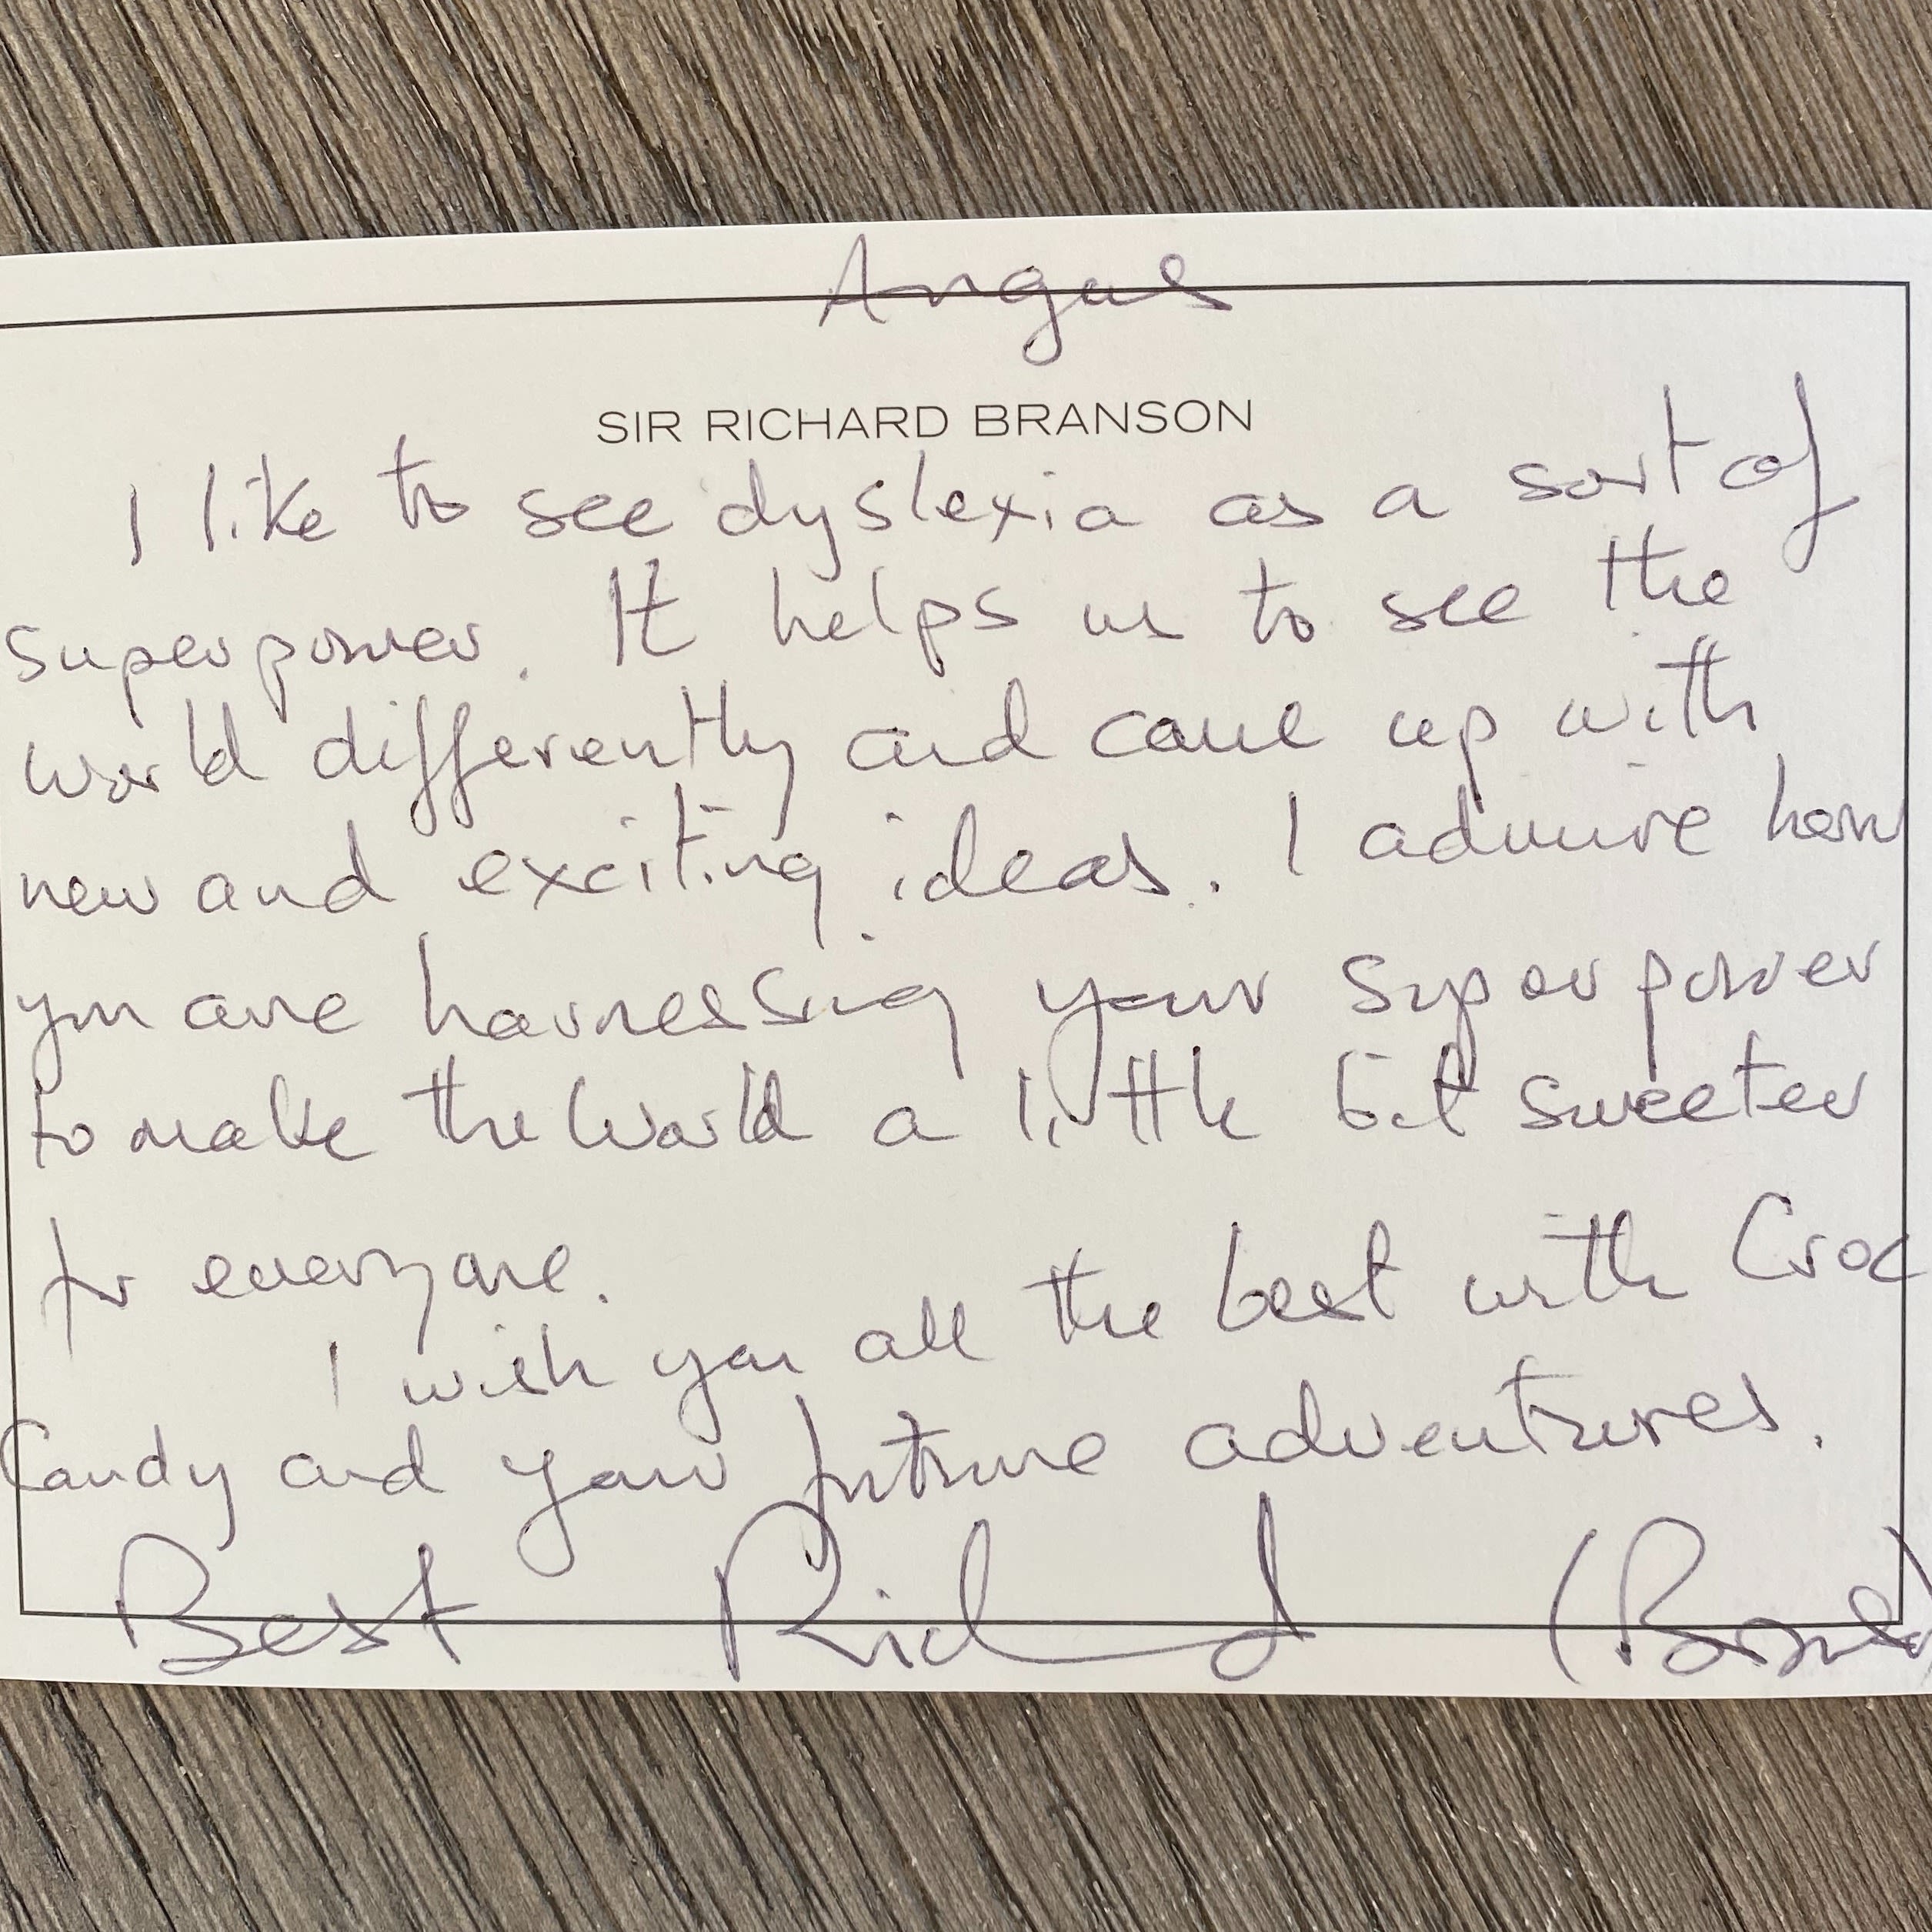 Richard Branson's handwritten letter to a young, dyslexic entrepreneur